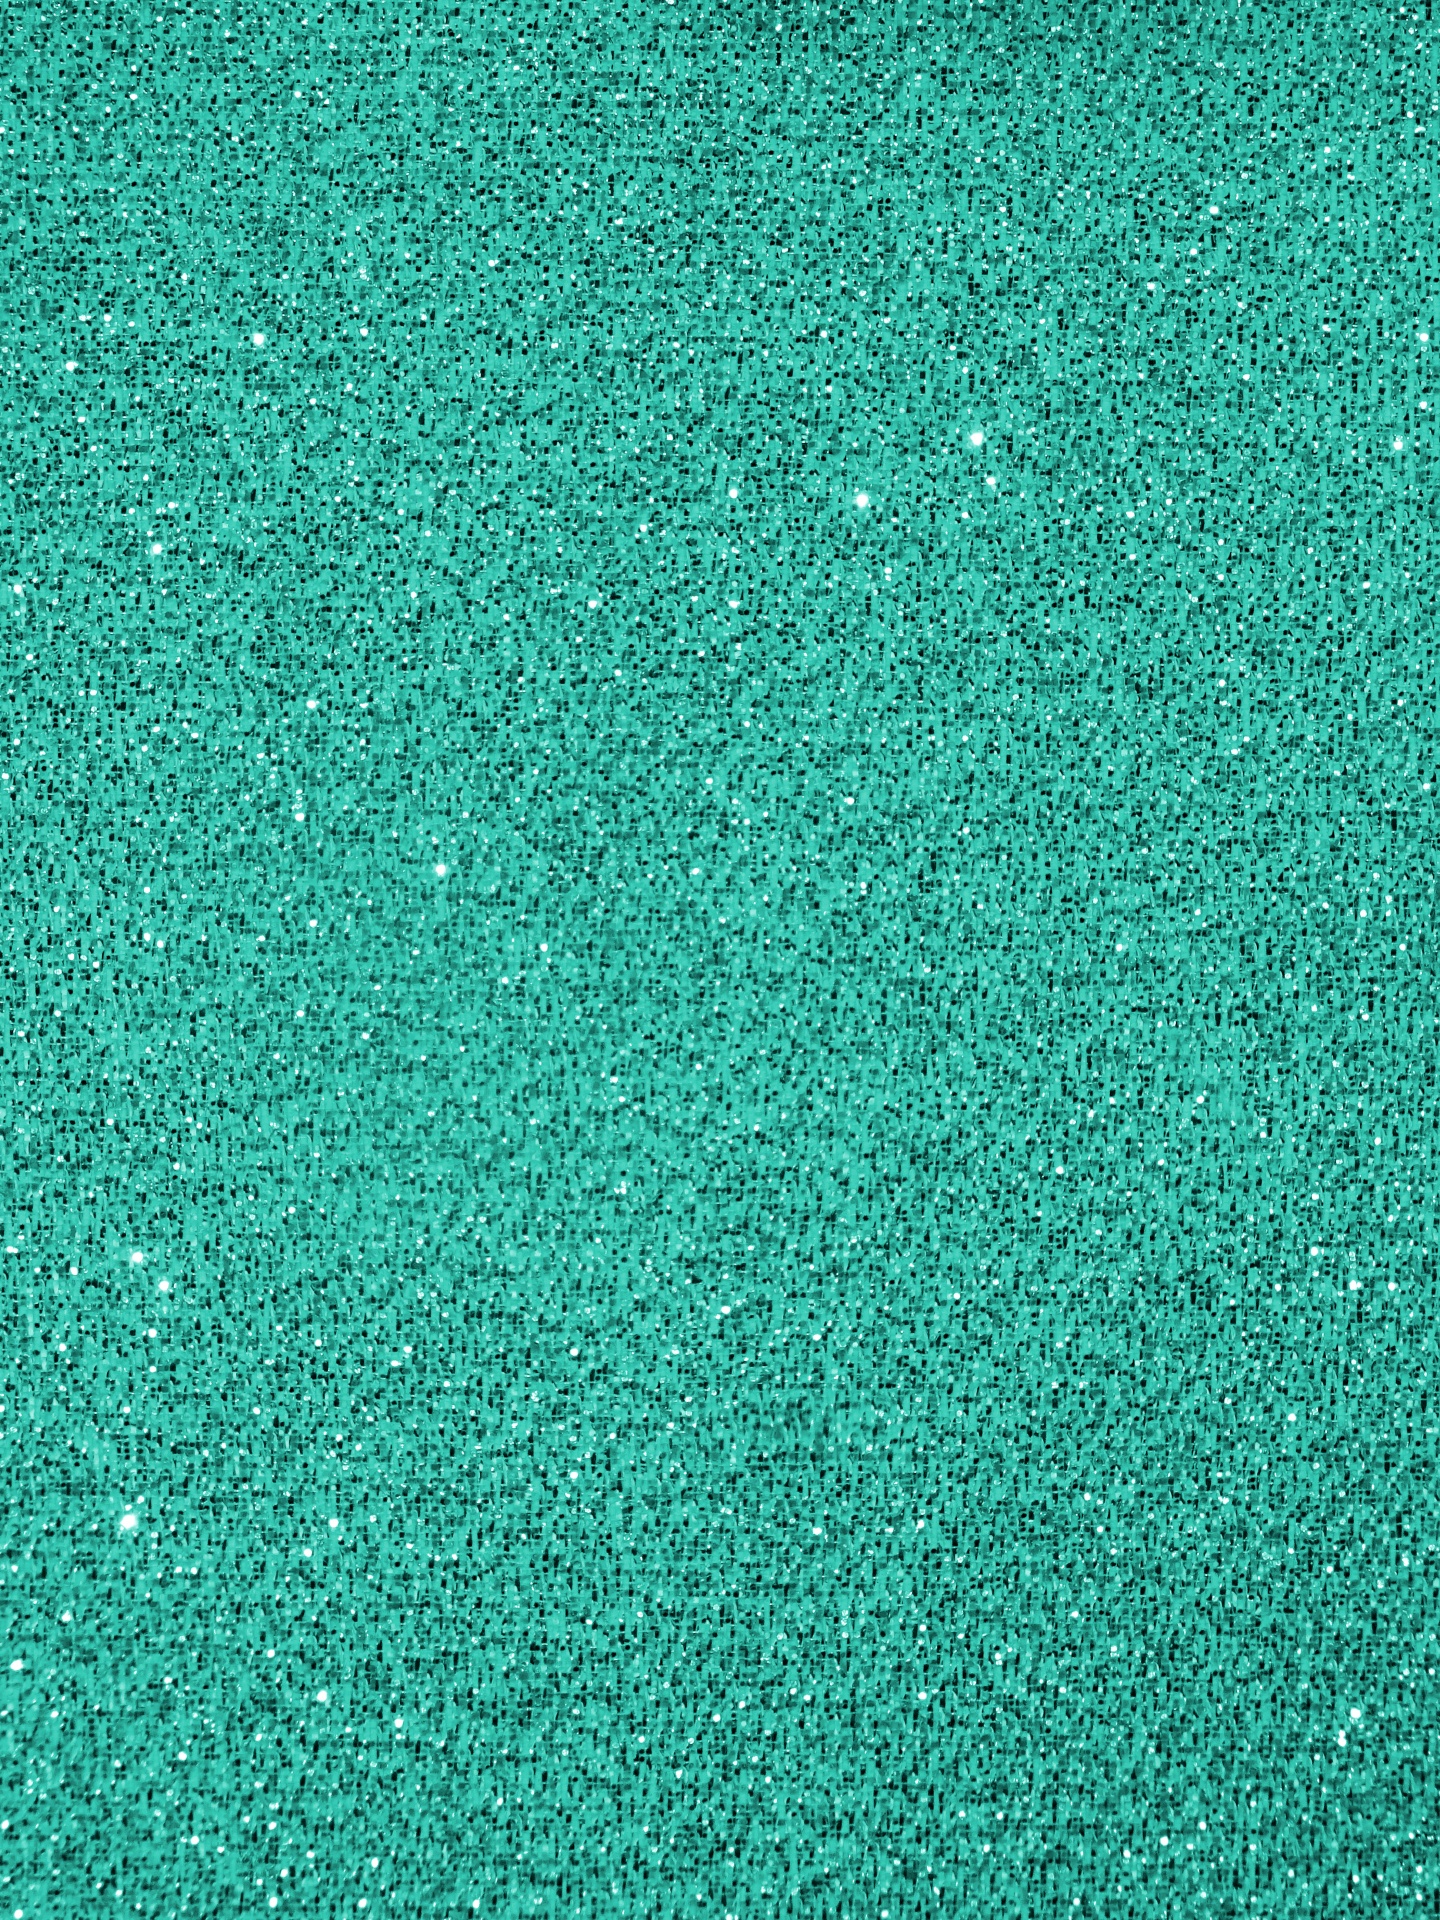 Turquoise Glistening Coarse Background 291117